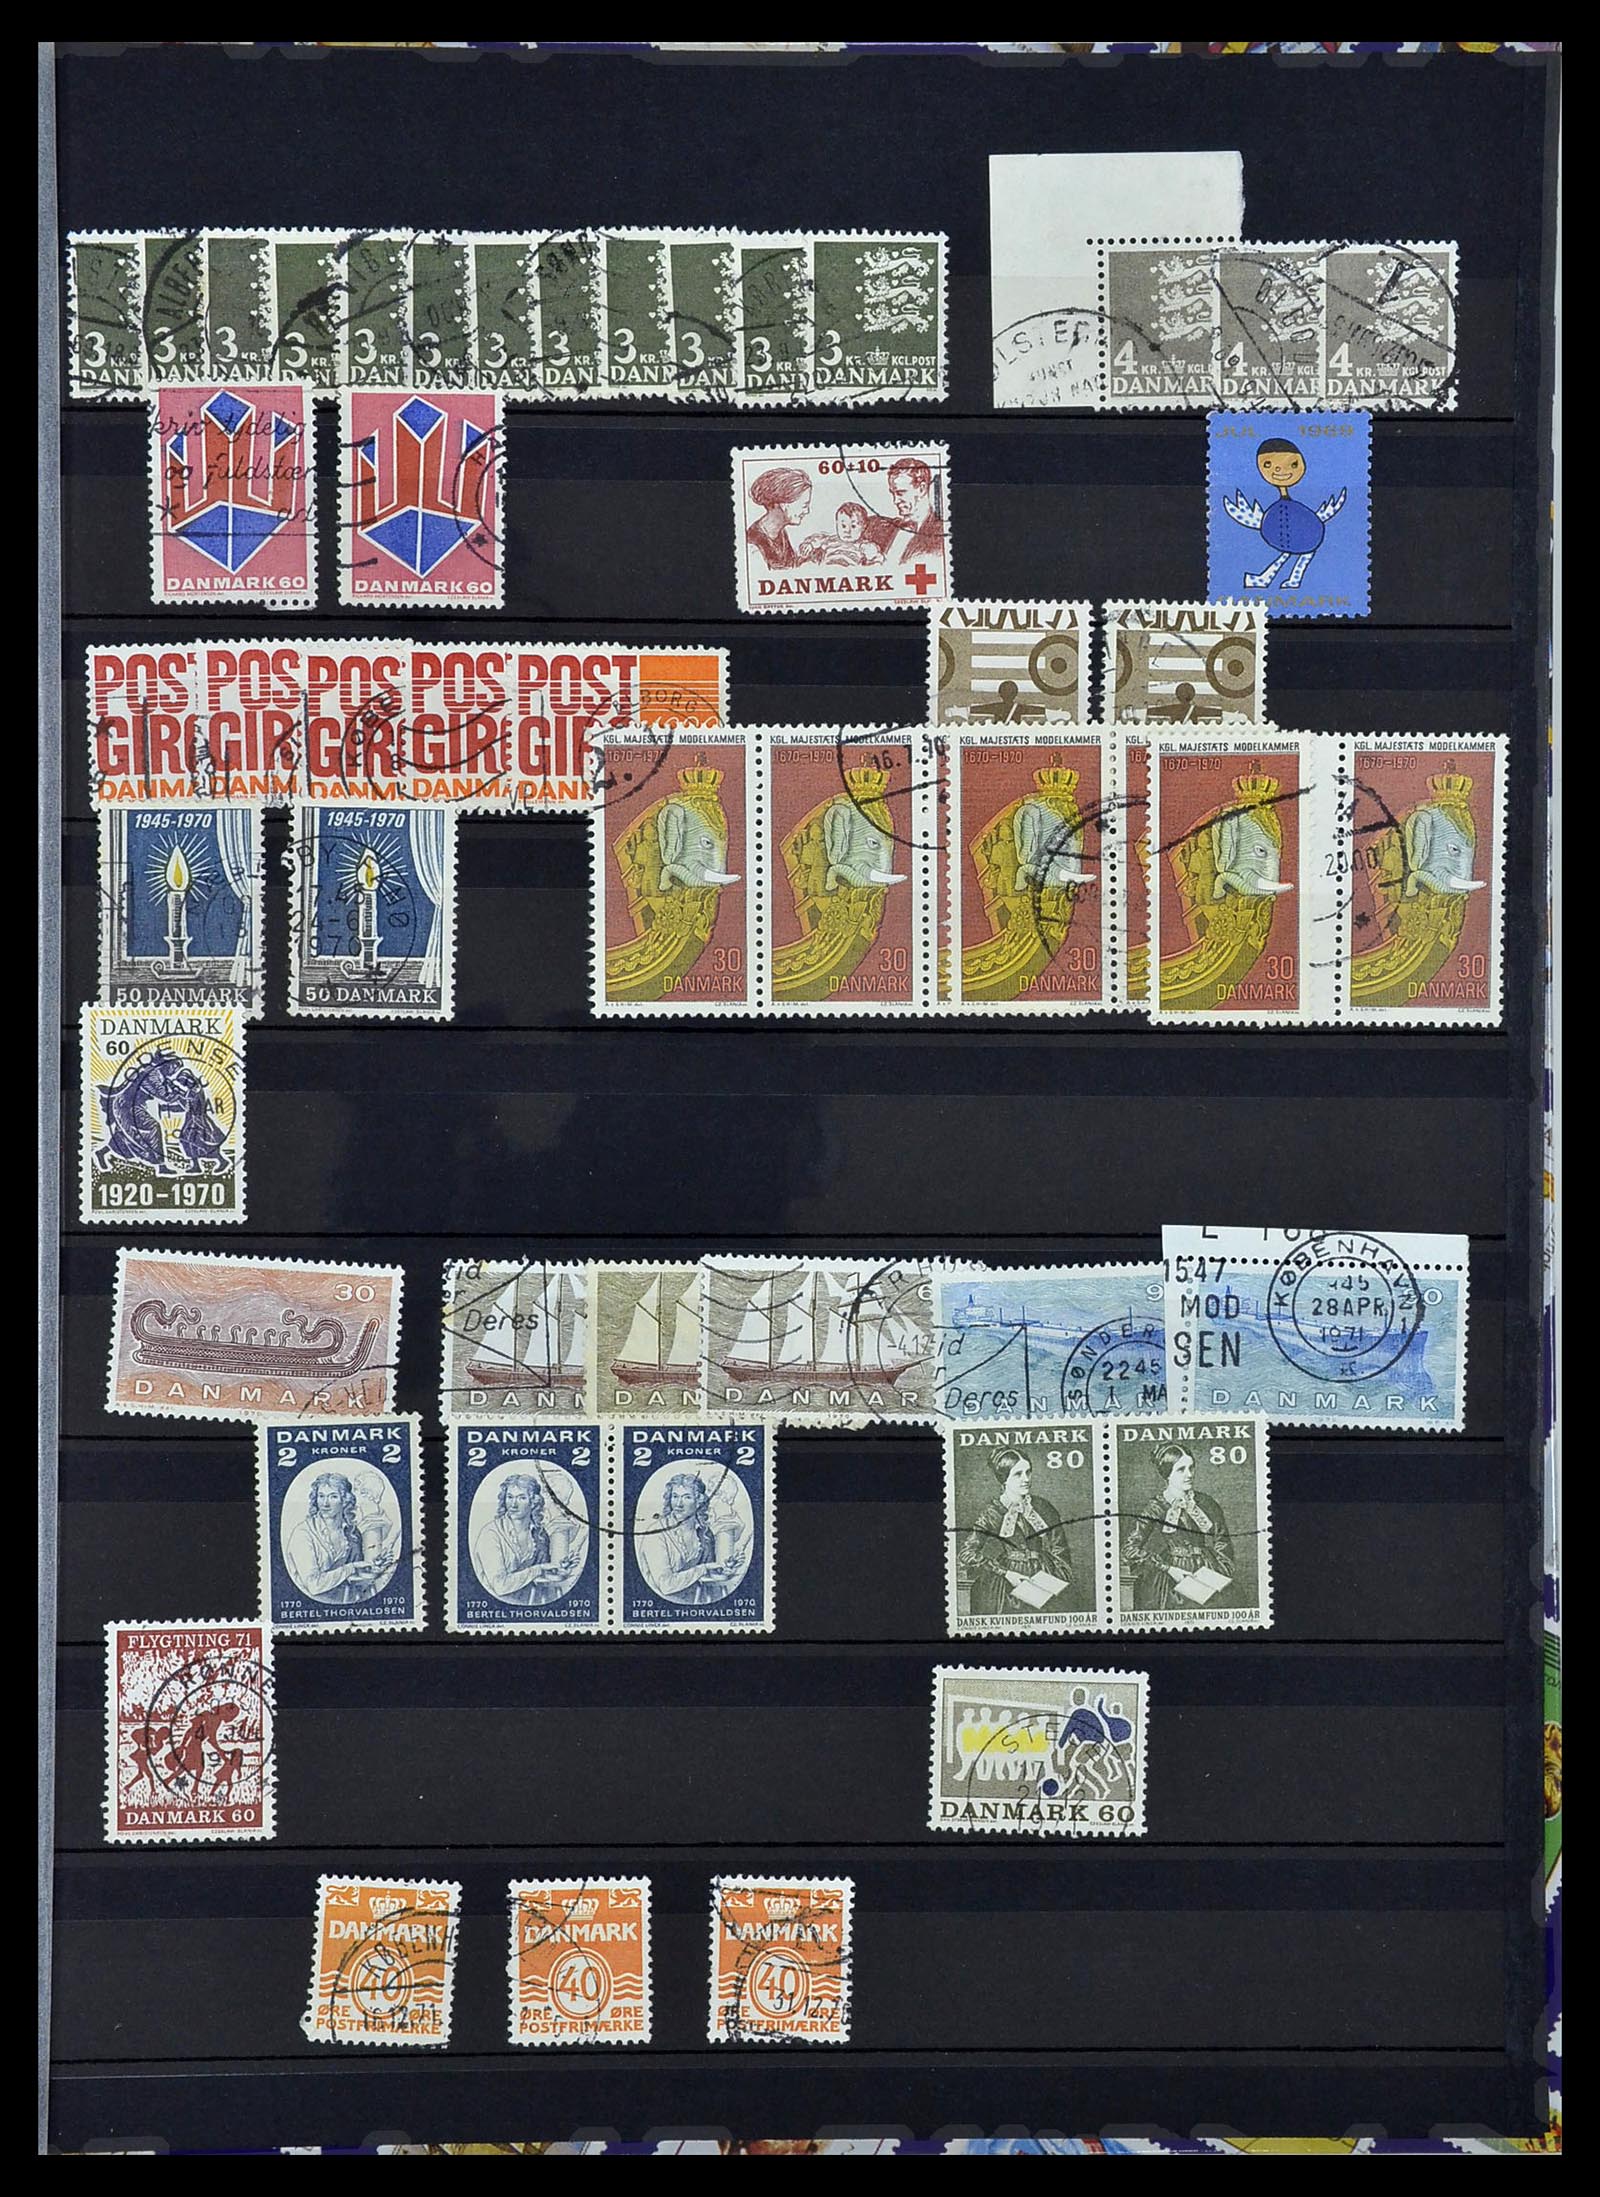 34313 434 - Stamp collection 34313 Scandinavia 1856-1990.